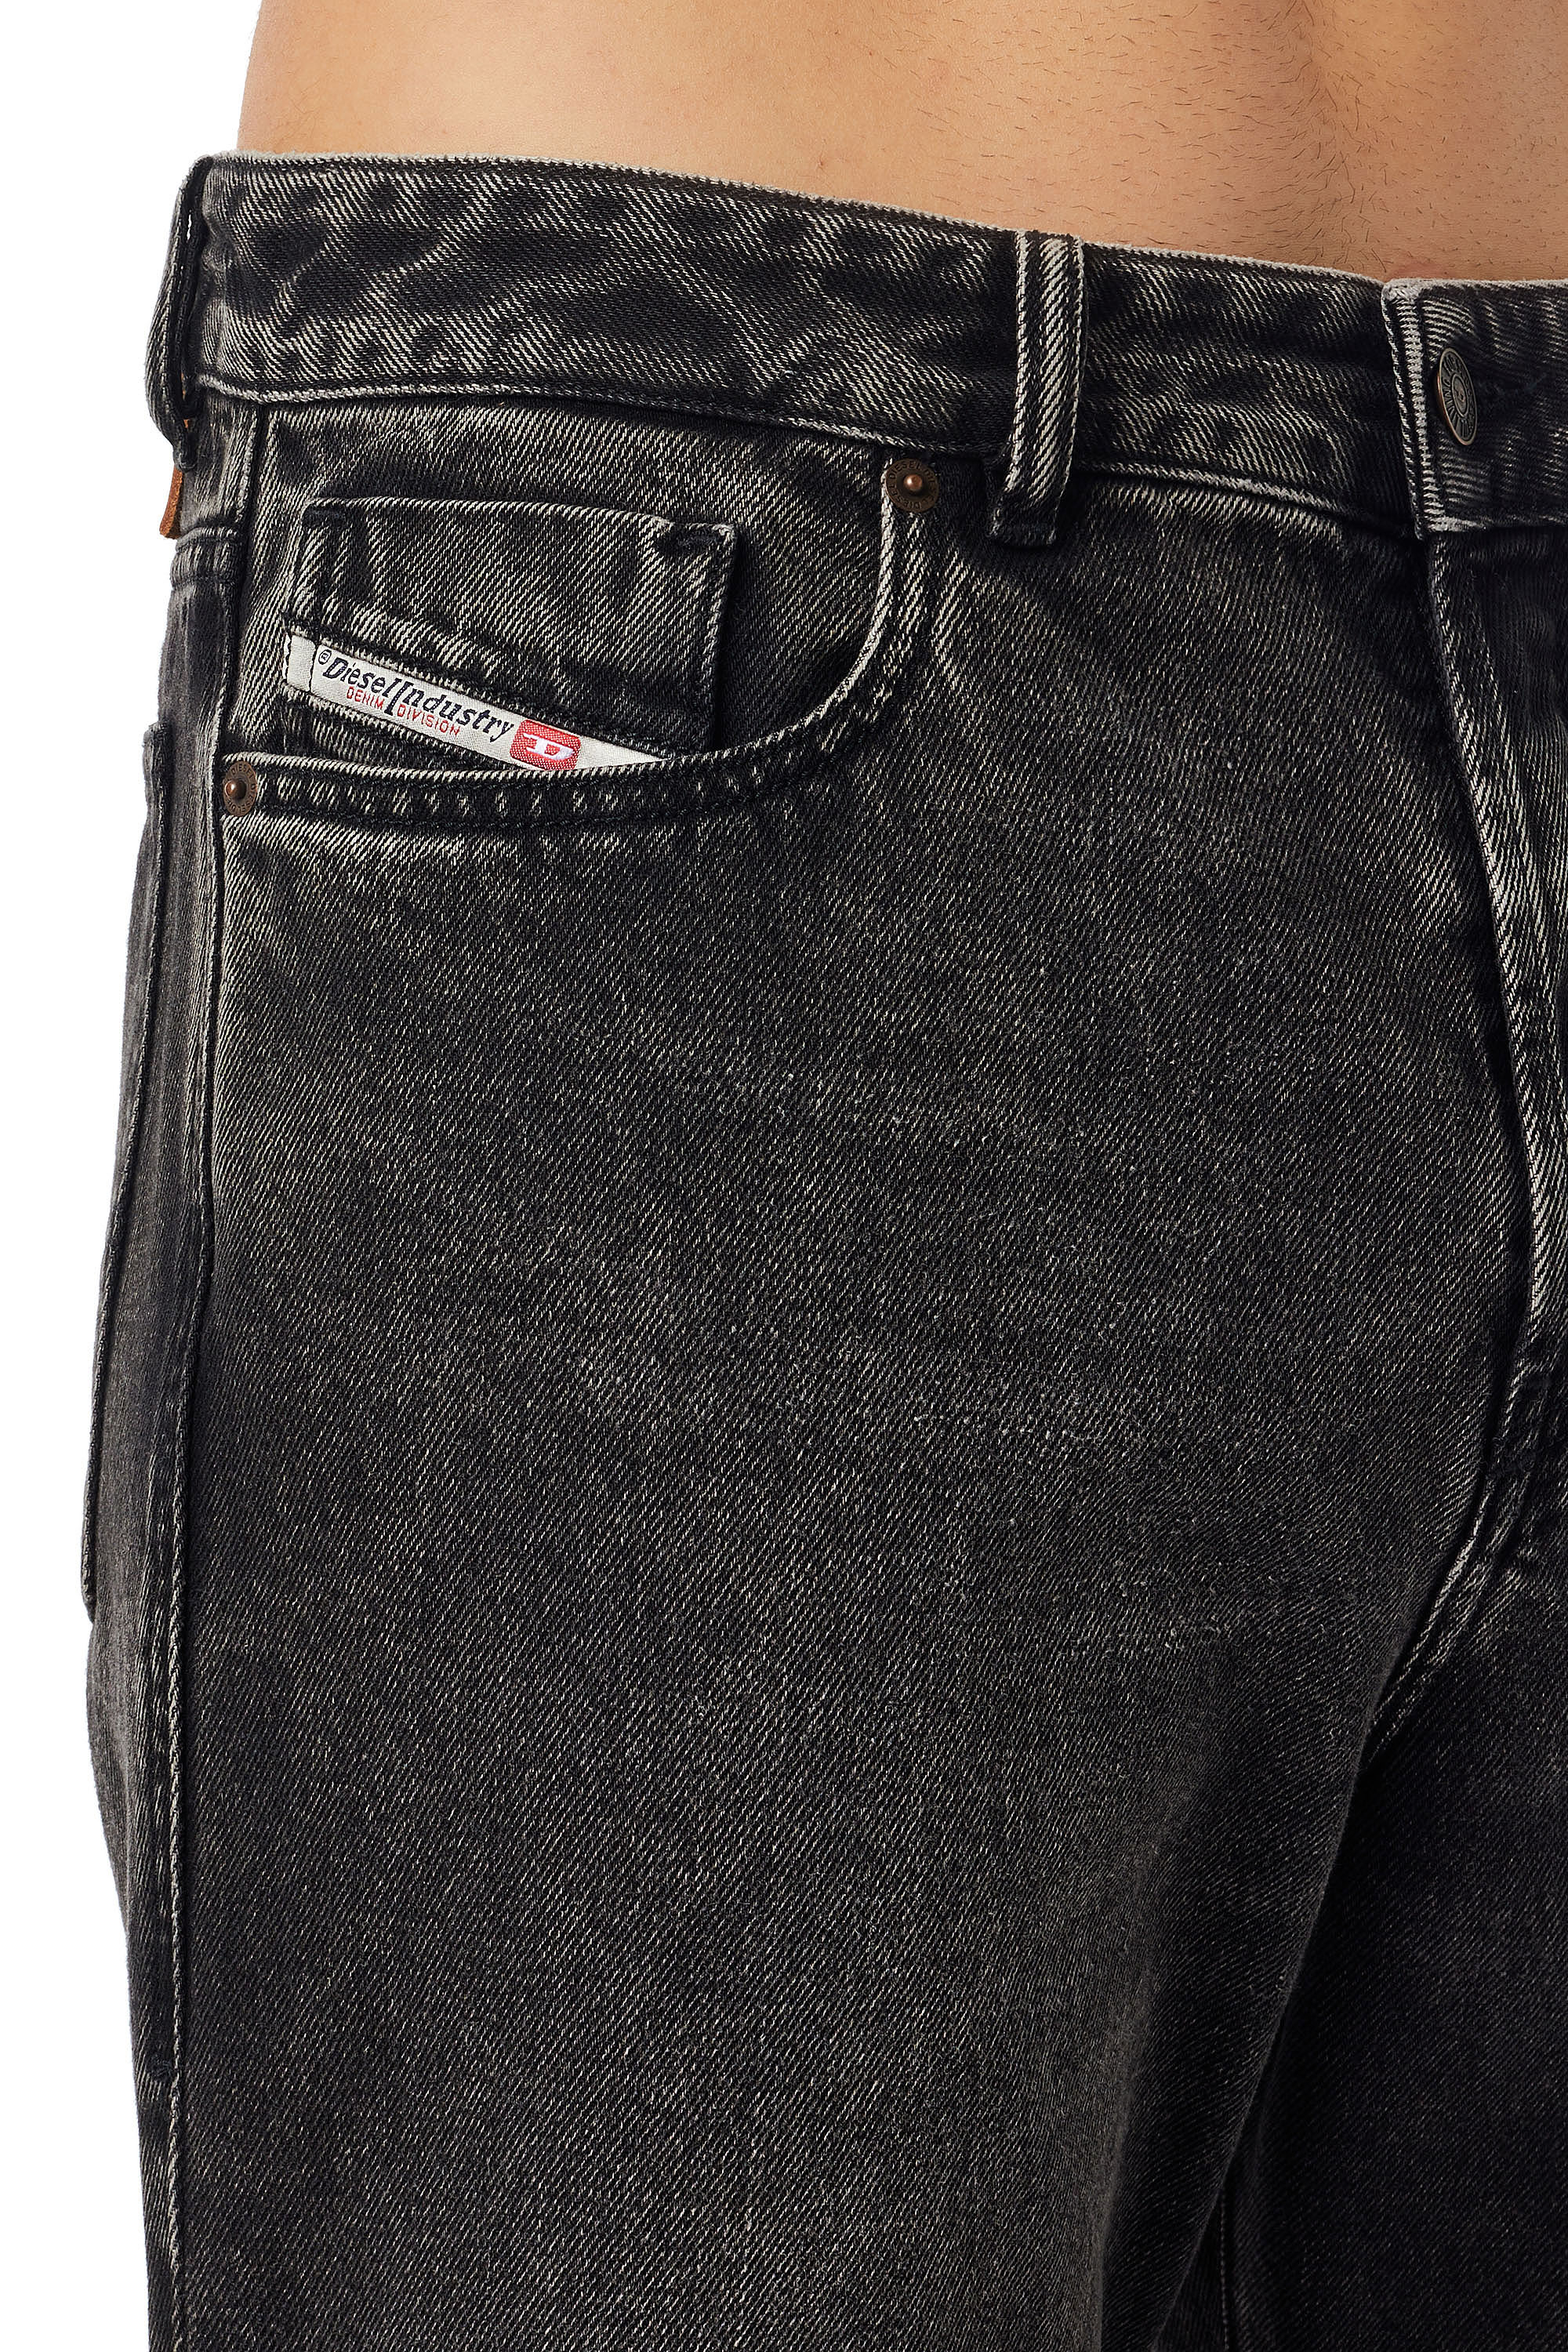 Men's Collection: New arrivals, Jeans, Jacket, T shirt | Diesel®